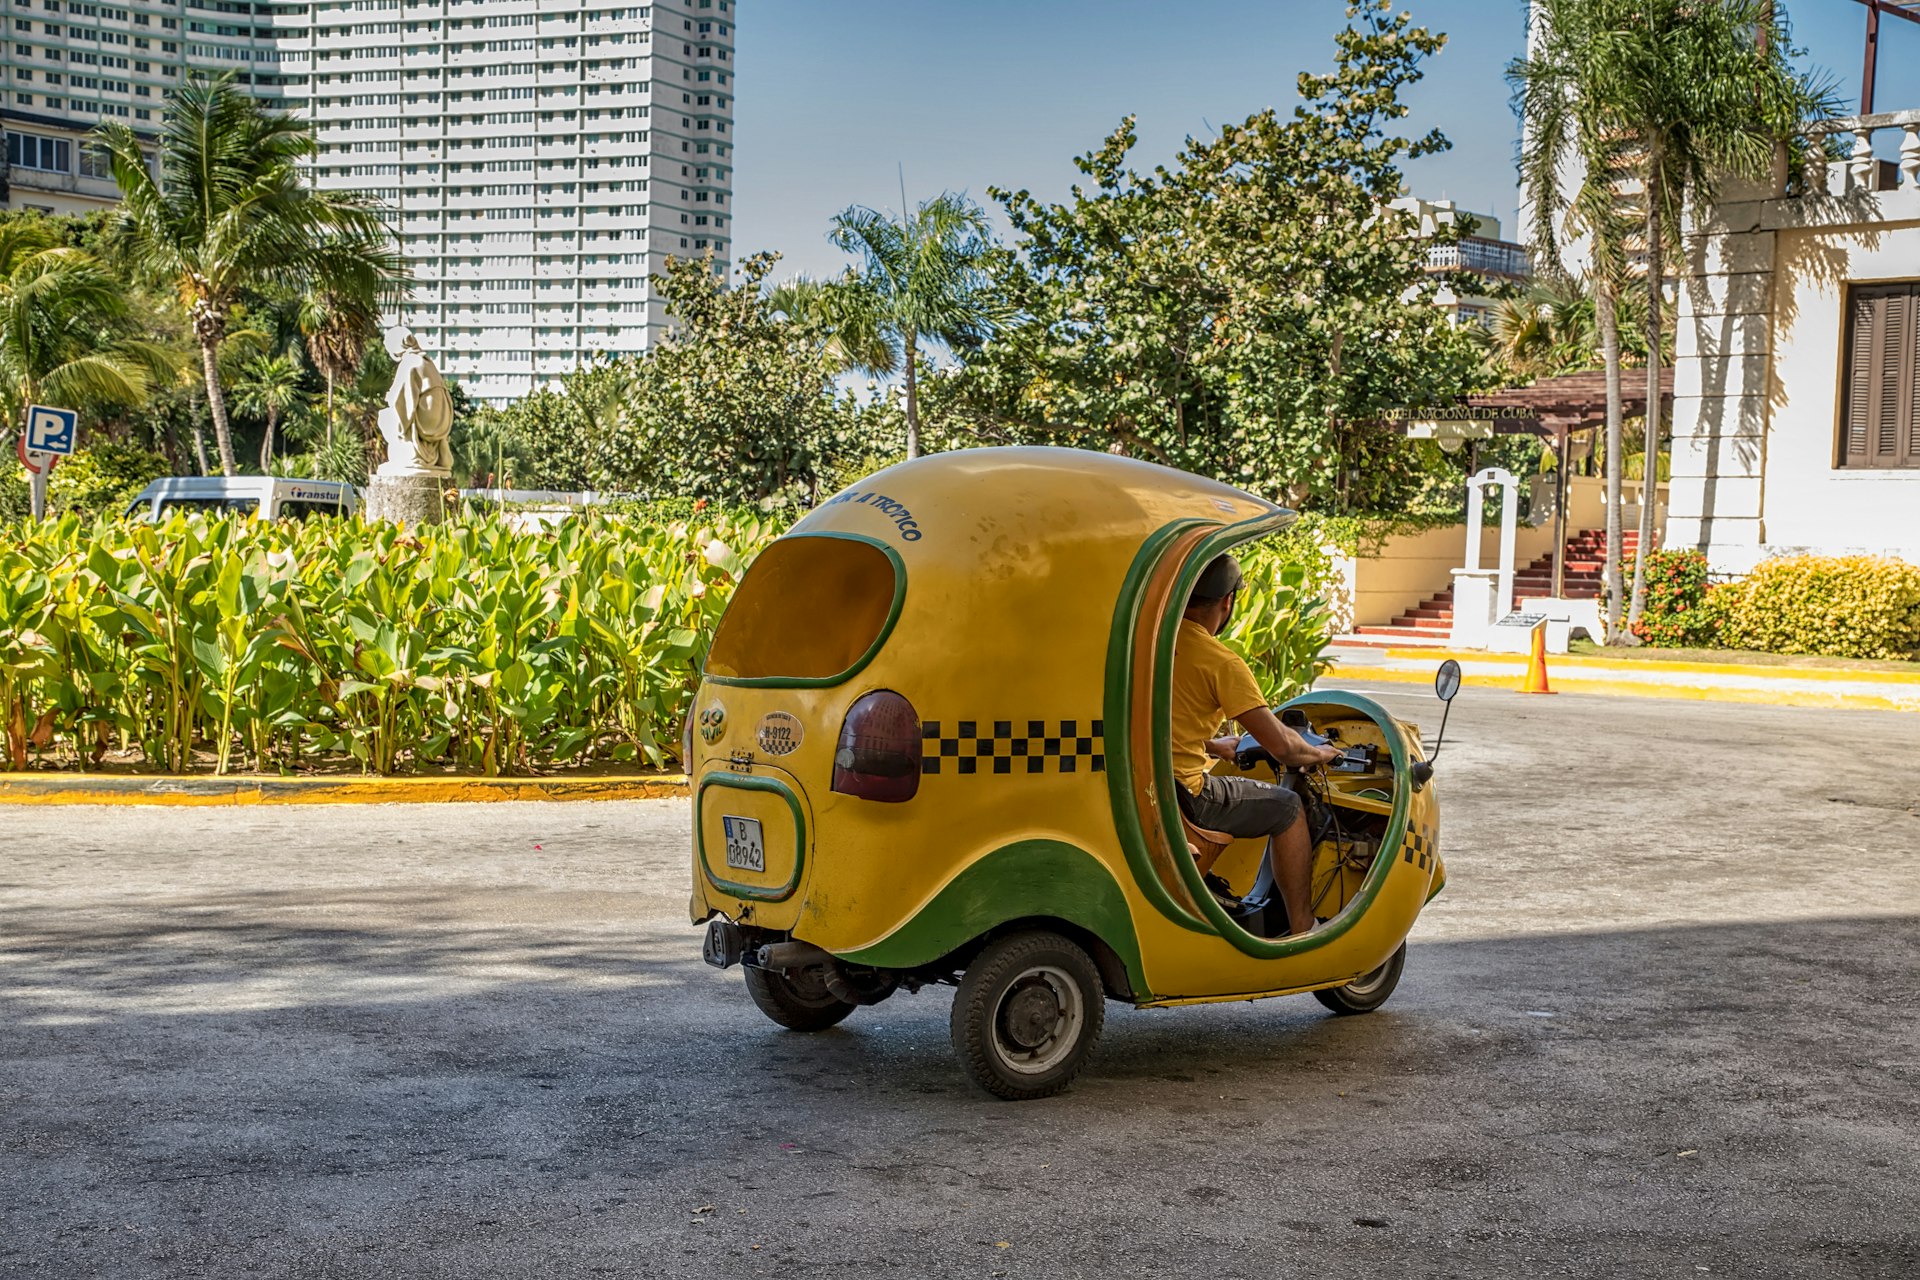 A yellow, coconut-shaped Cuban motorbike taxi (known as a Coco taxi), near the Hotel Nacional de Cuba in Havana